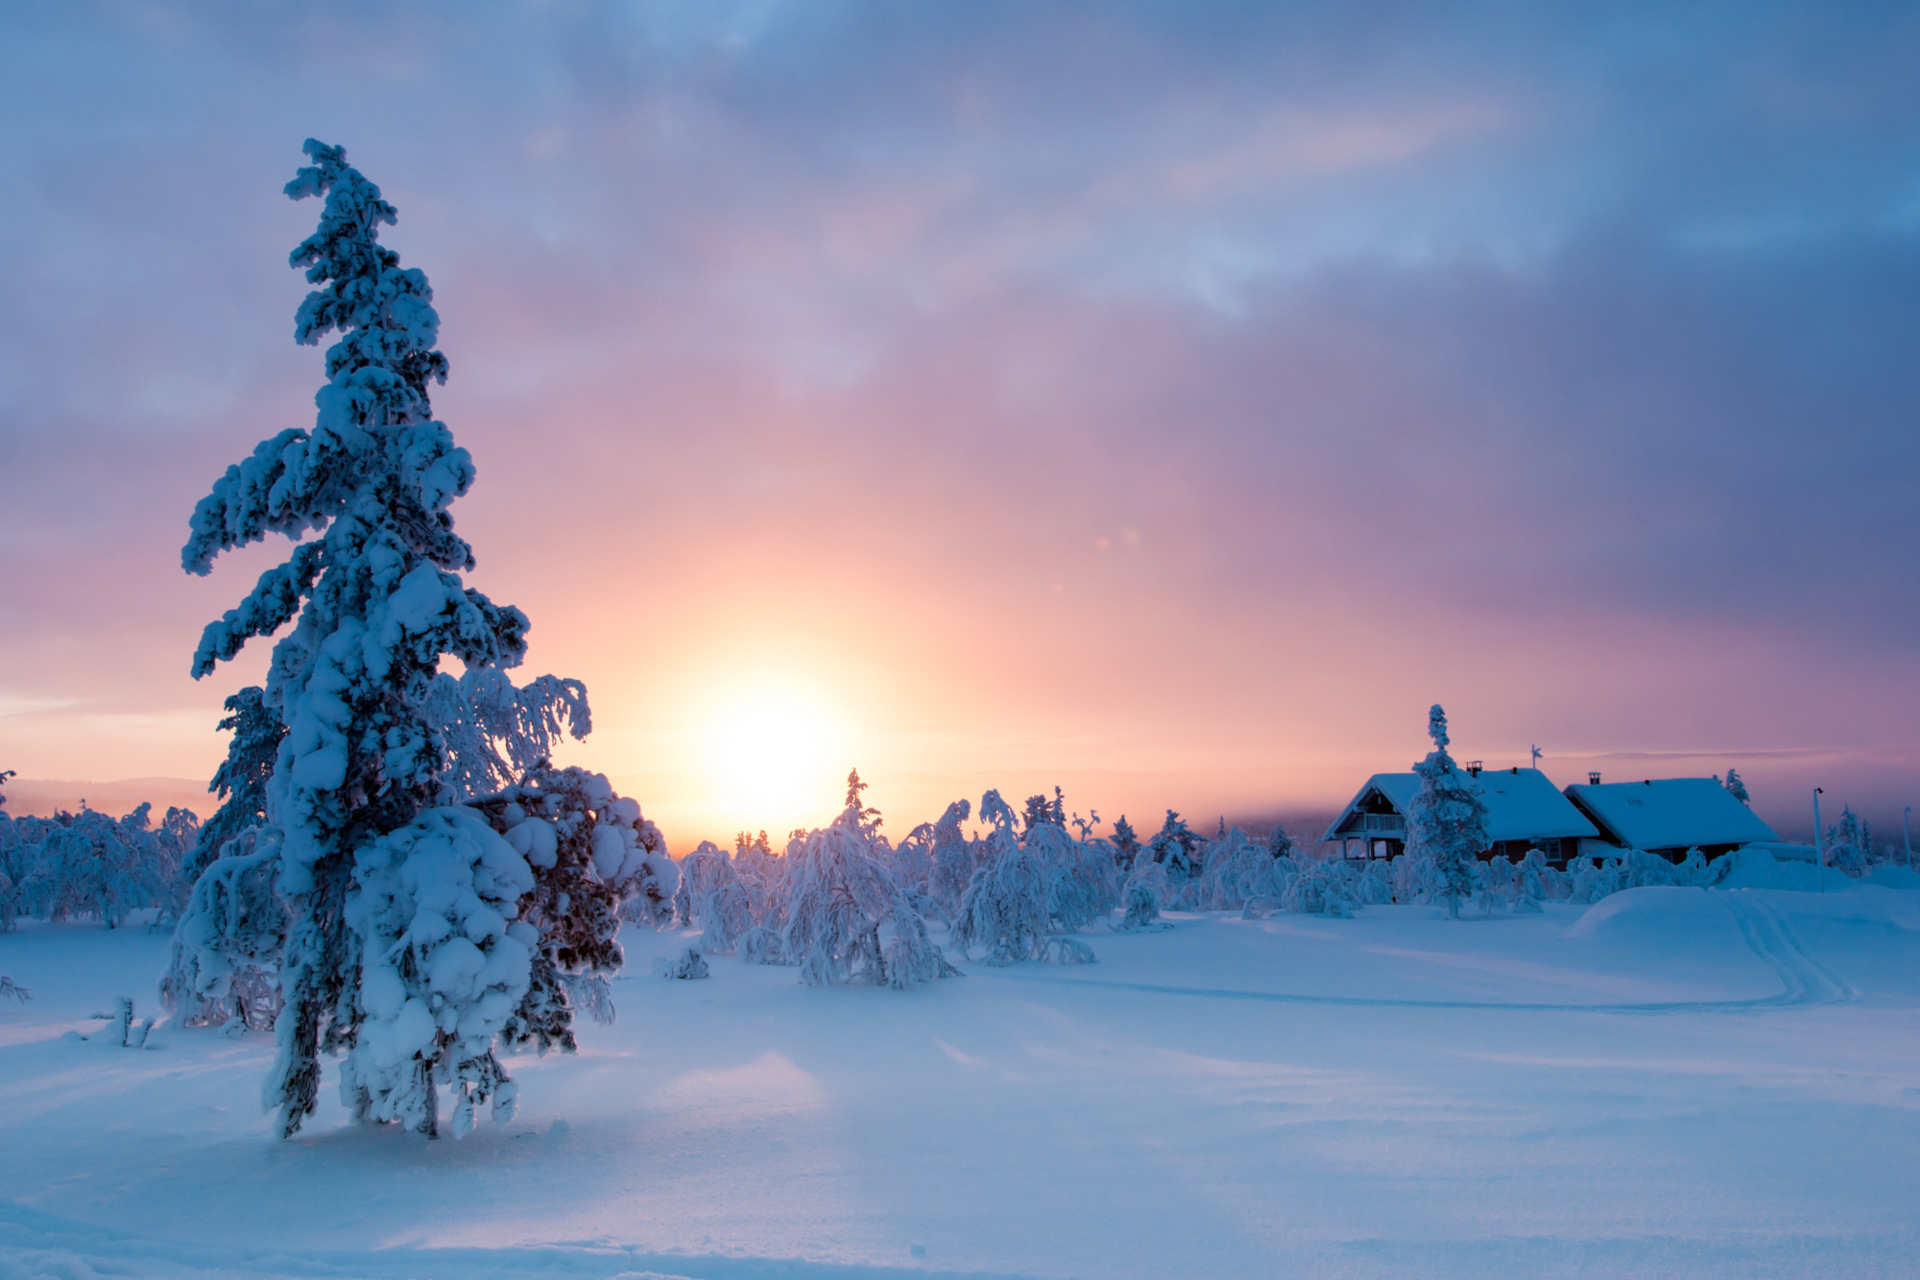 Filming in Finnish Lapland in winter